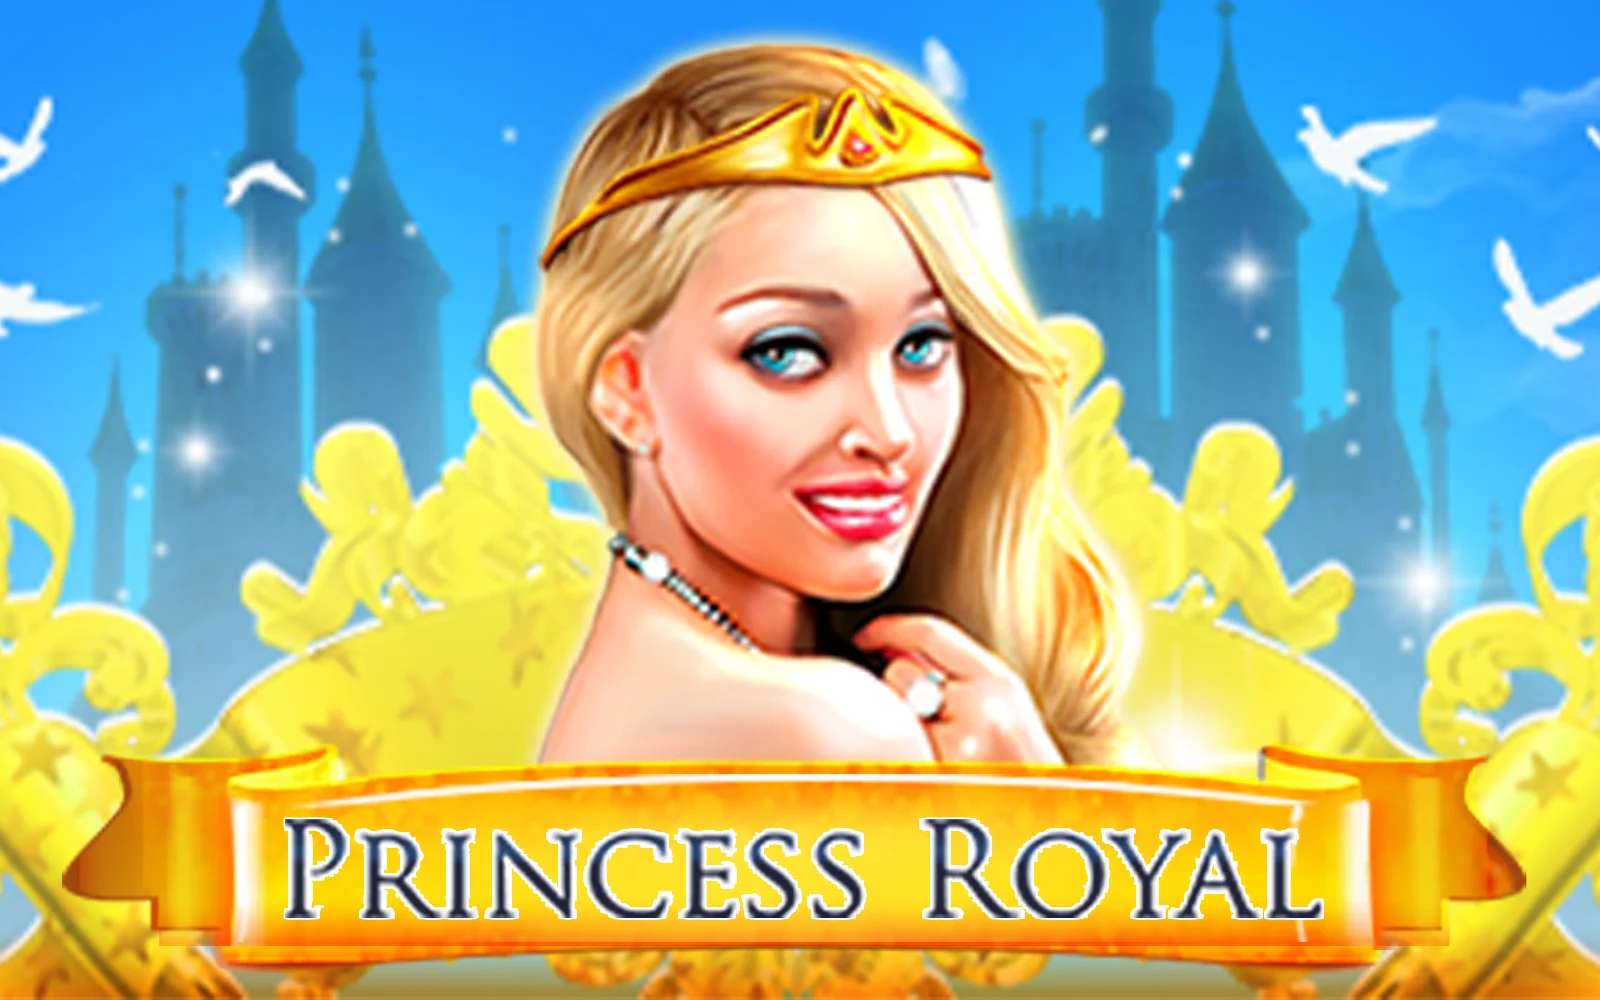 Speel Princess Royal op Starcasino.be online casino